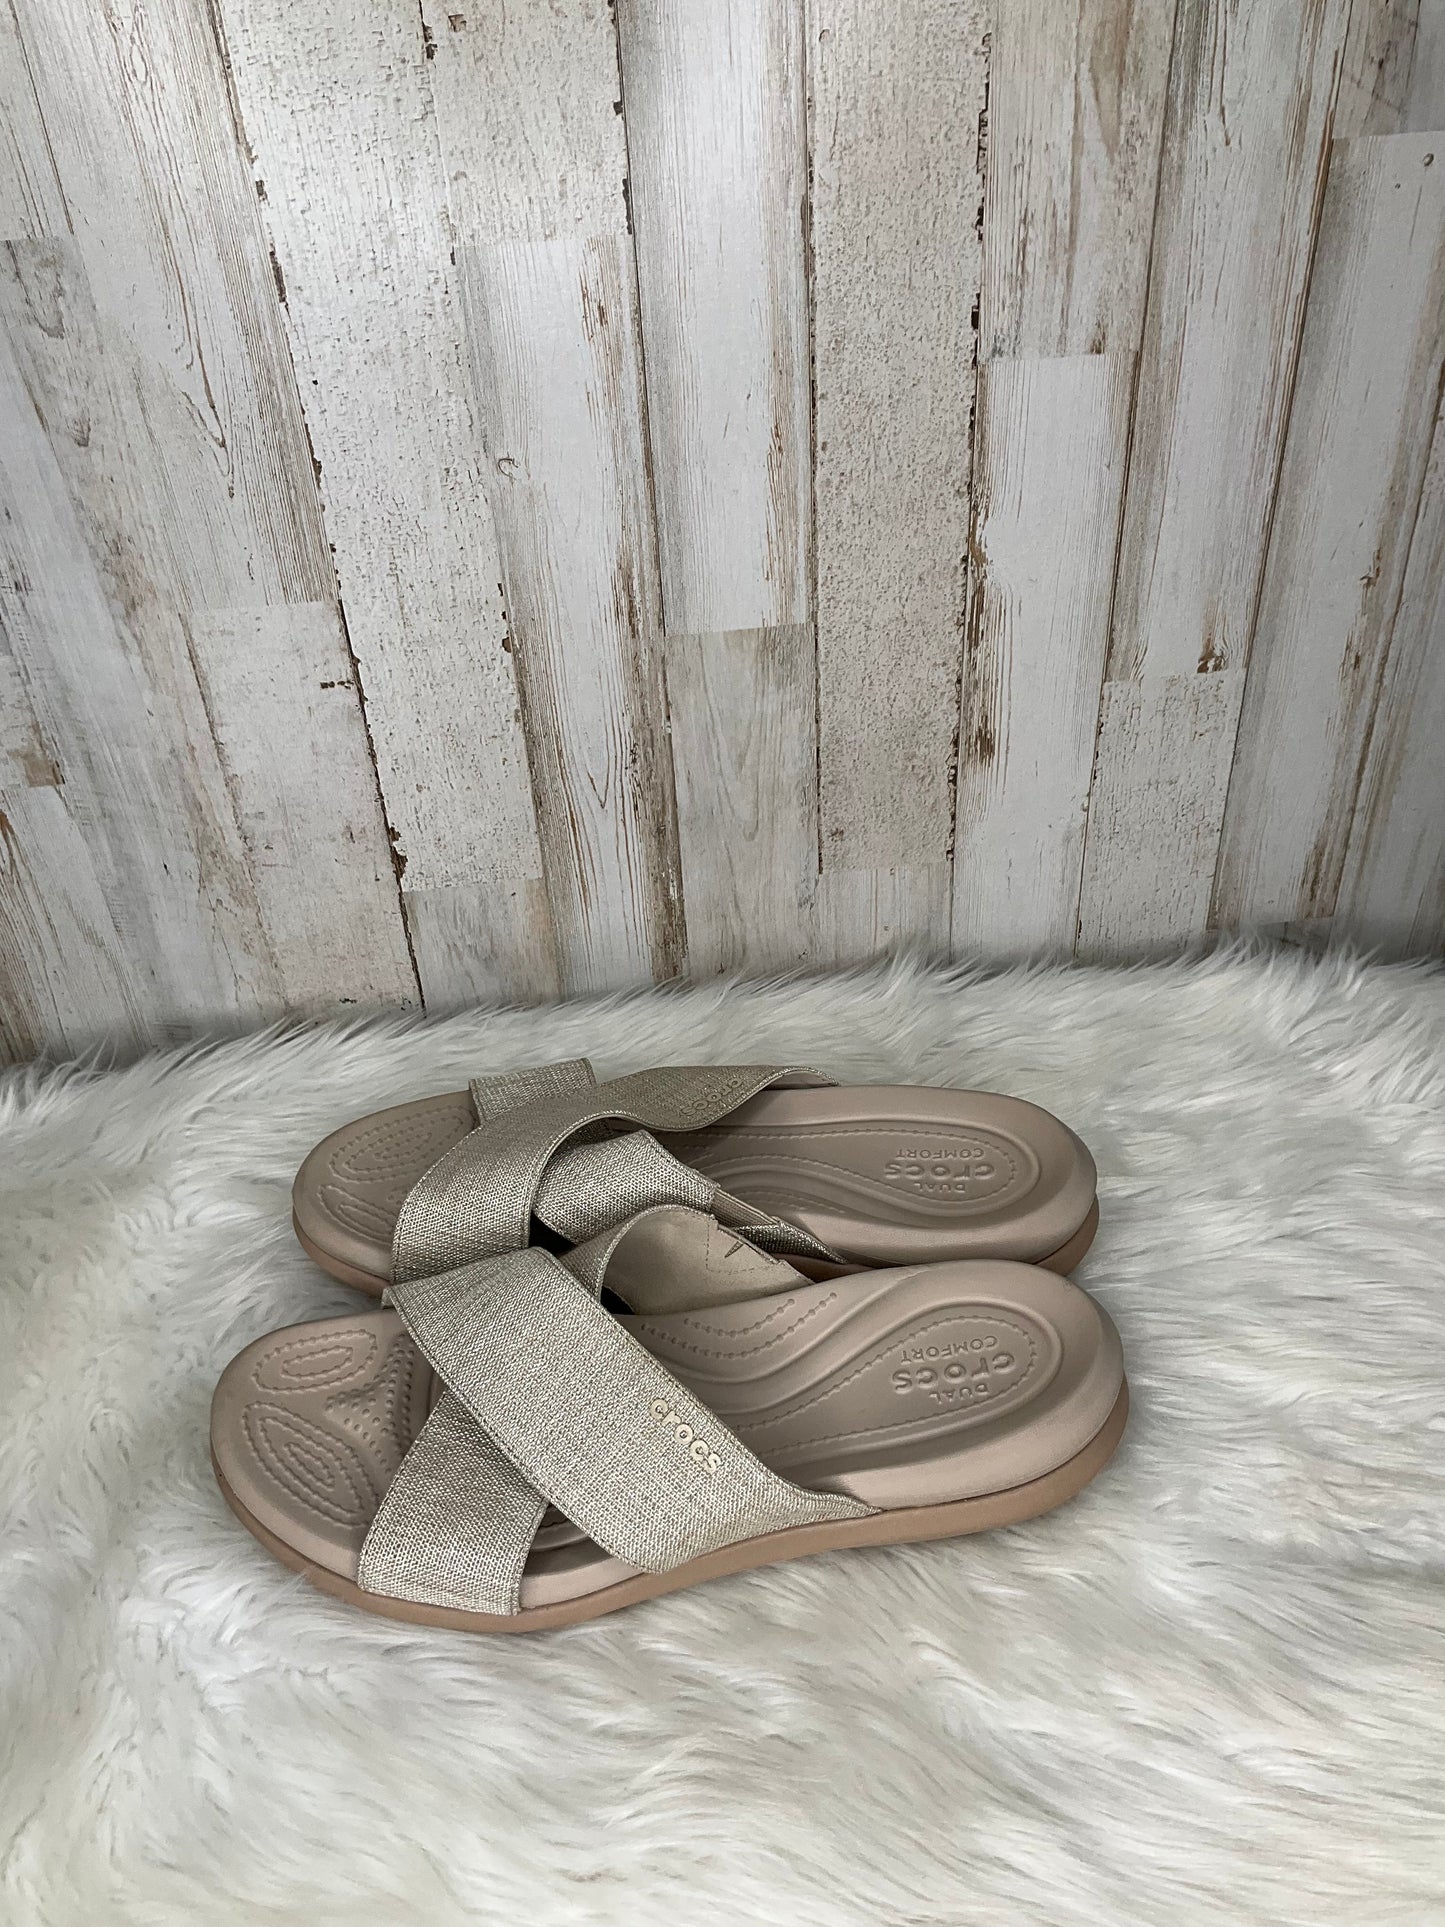 Silver Sandals Heels Platform Crocs, Size 9